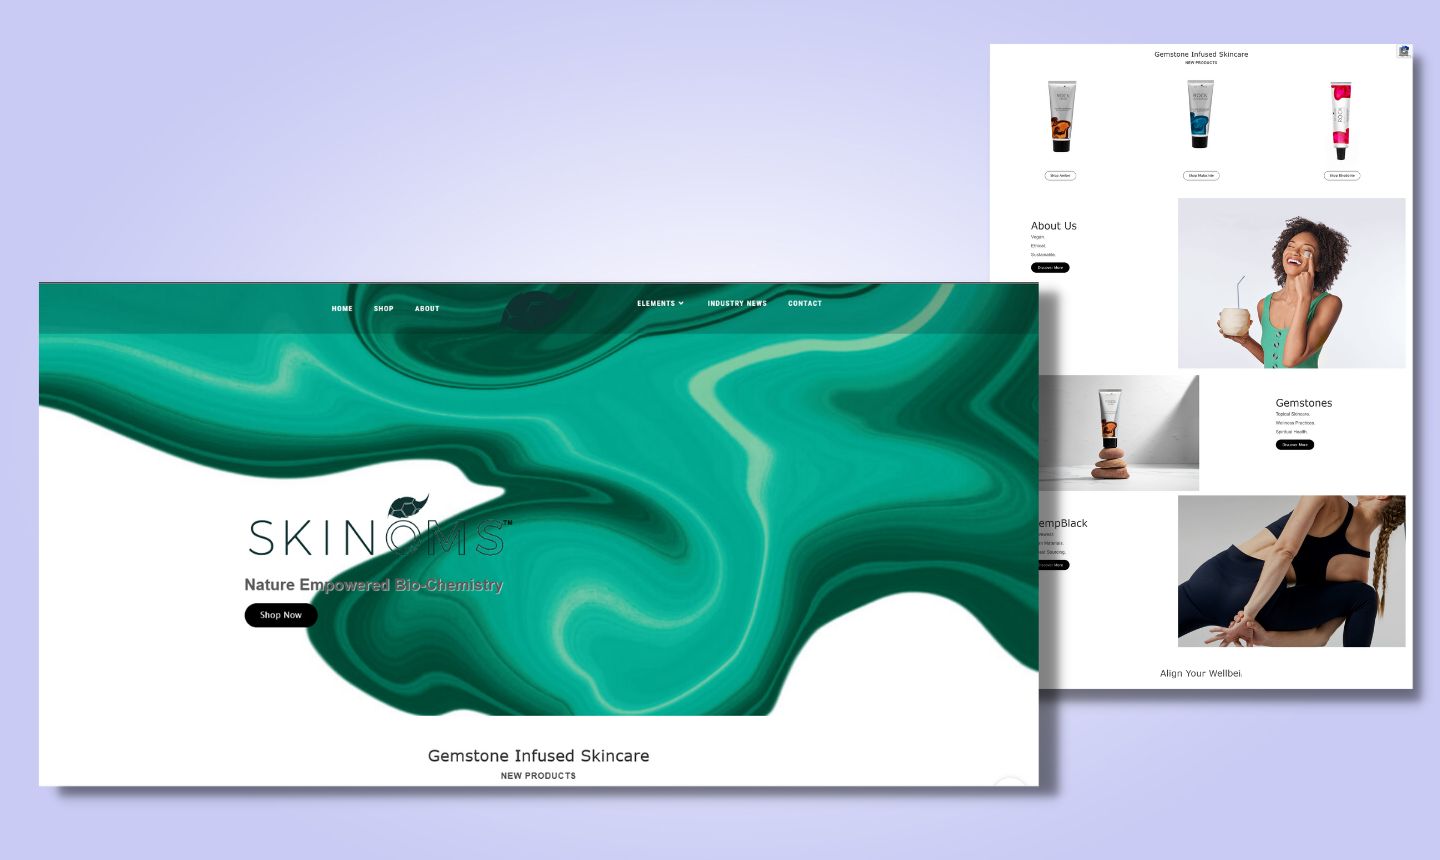 Skinoms Website design by DigitalMarketingNetic